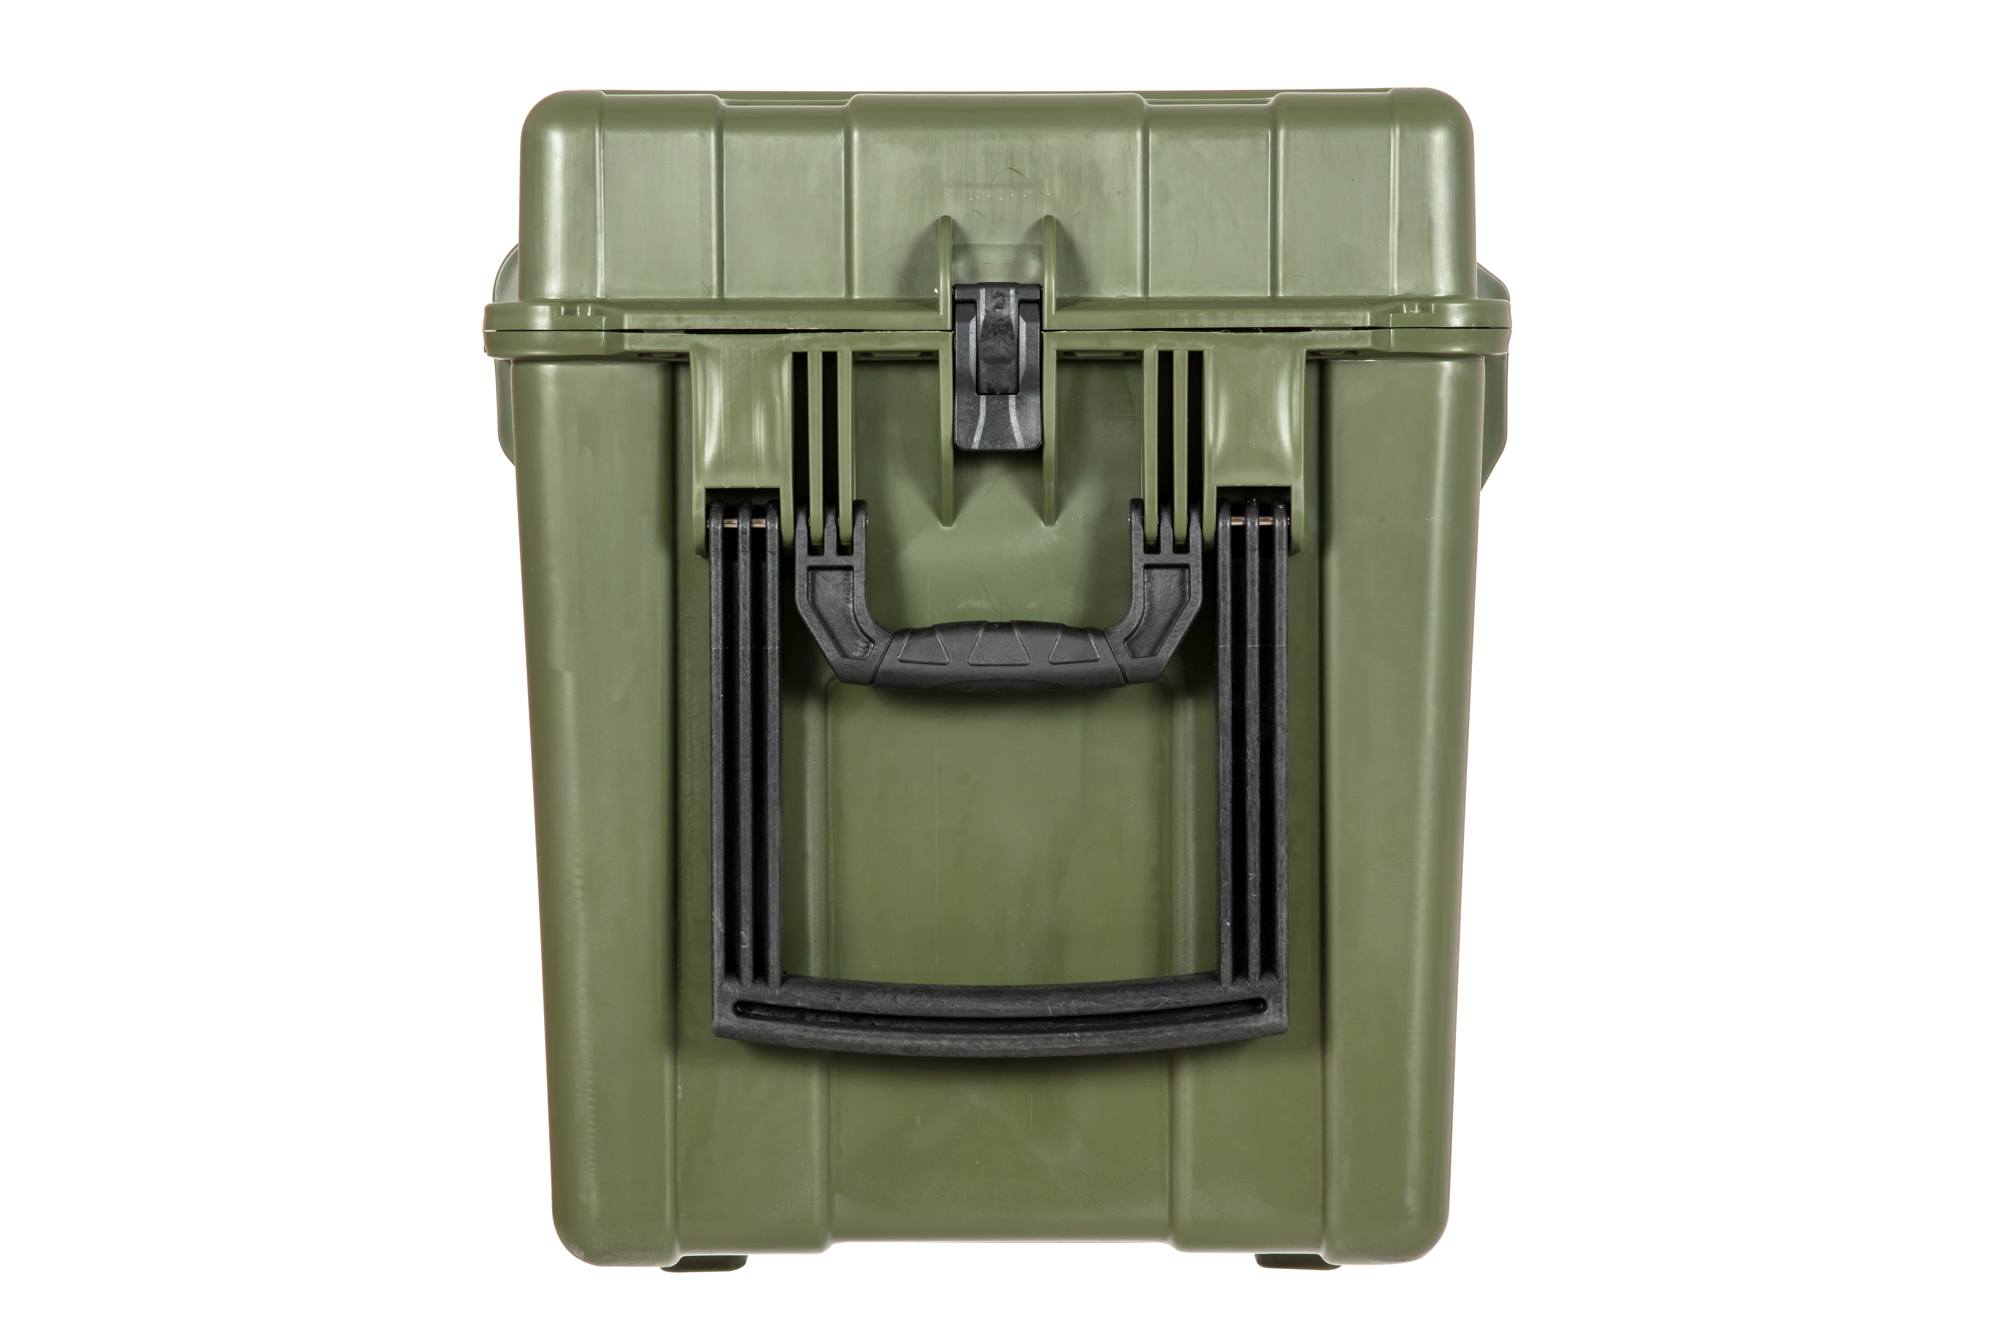 Kit Box Hard Case – Olive Drab